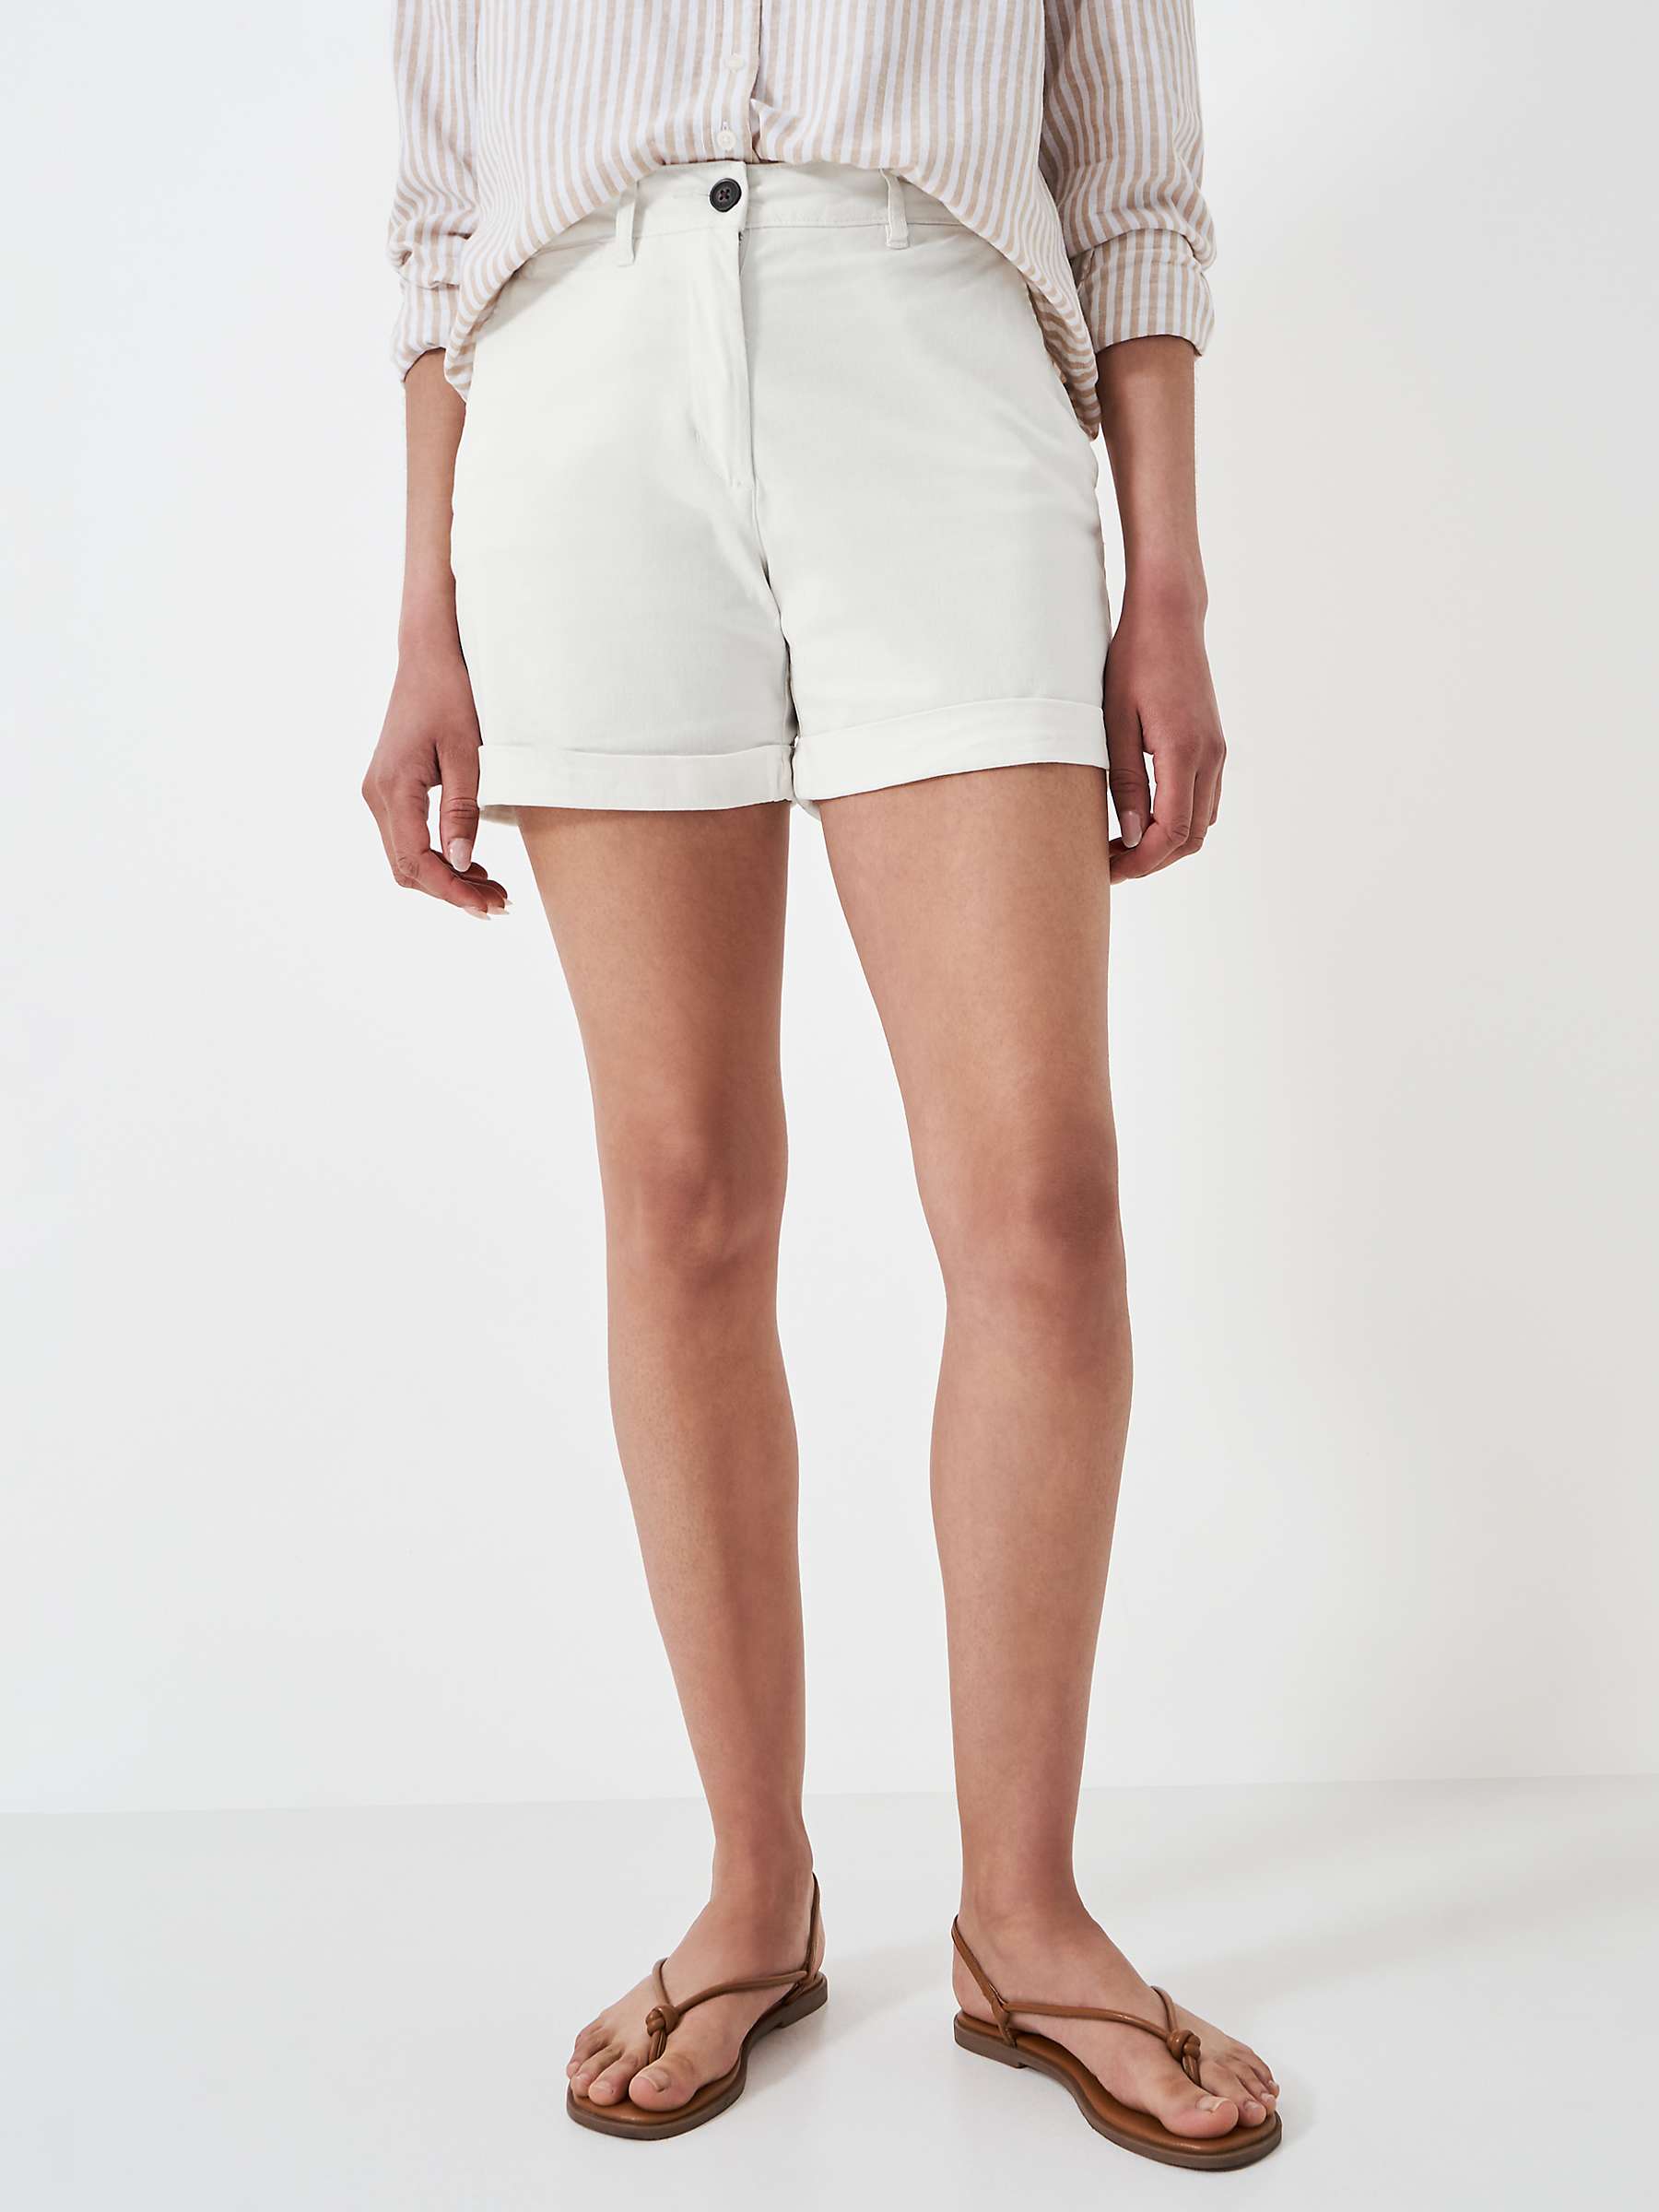 Buy Crew Clothing Chino Shorts, White Online at johnlewis.com